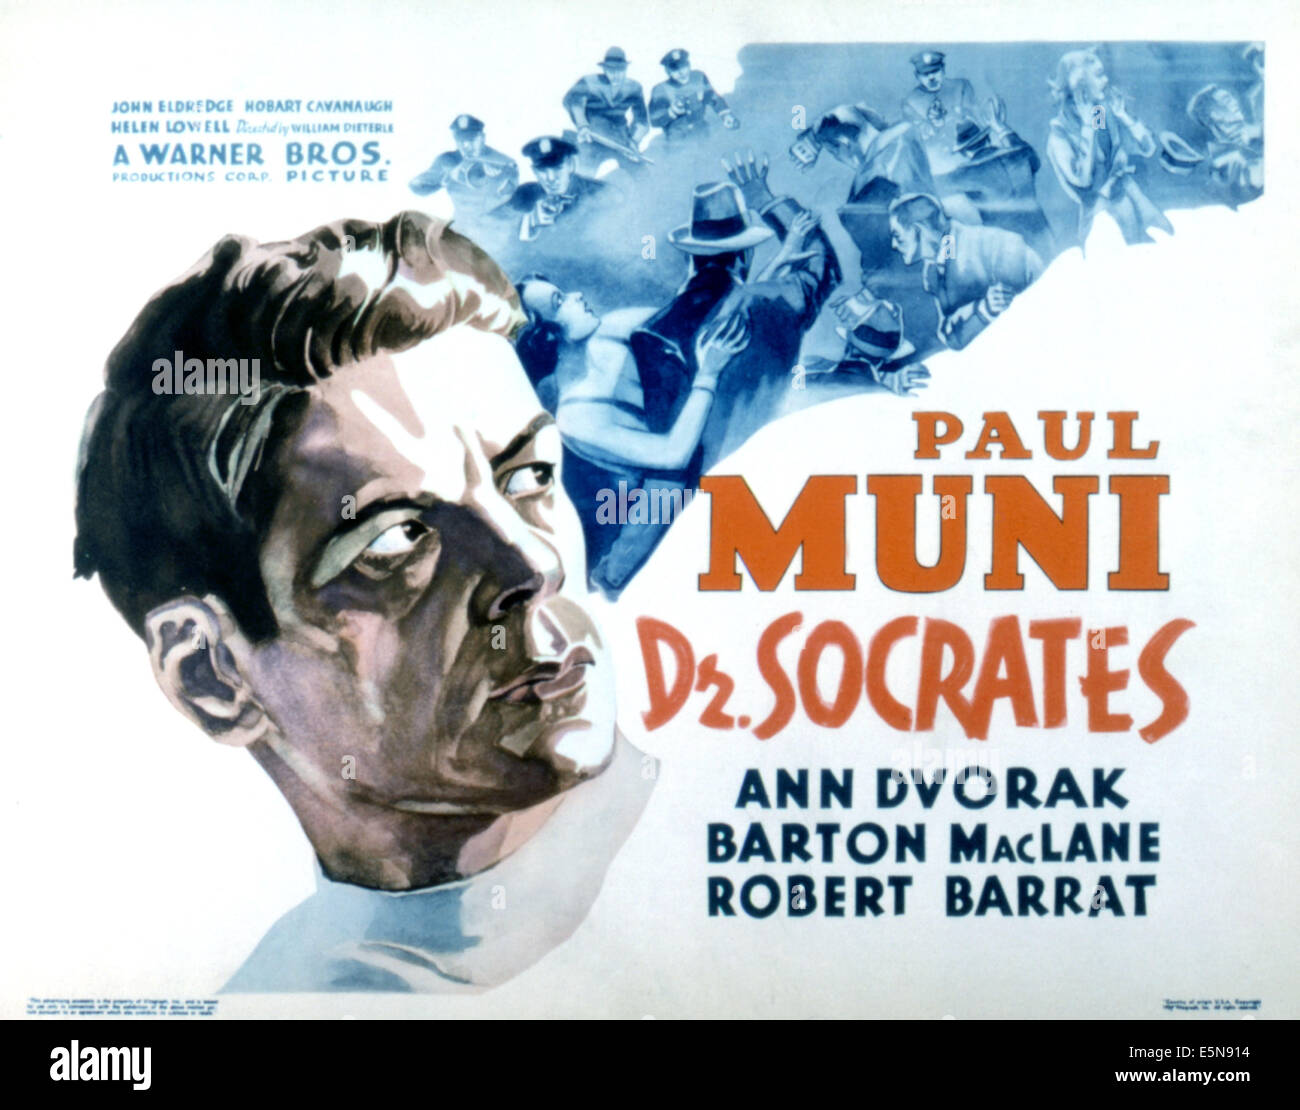 DR SOCRATES, Paul Muni, 1935 Stock Photo